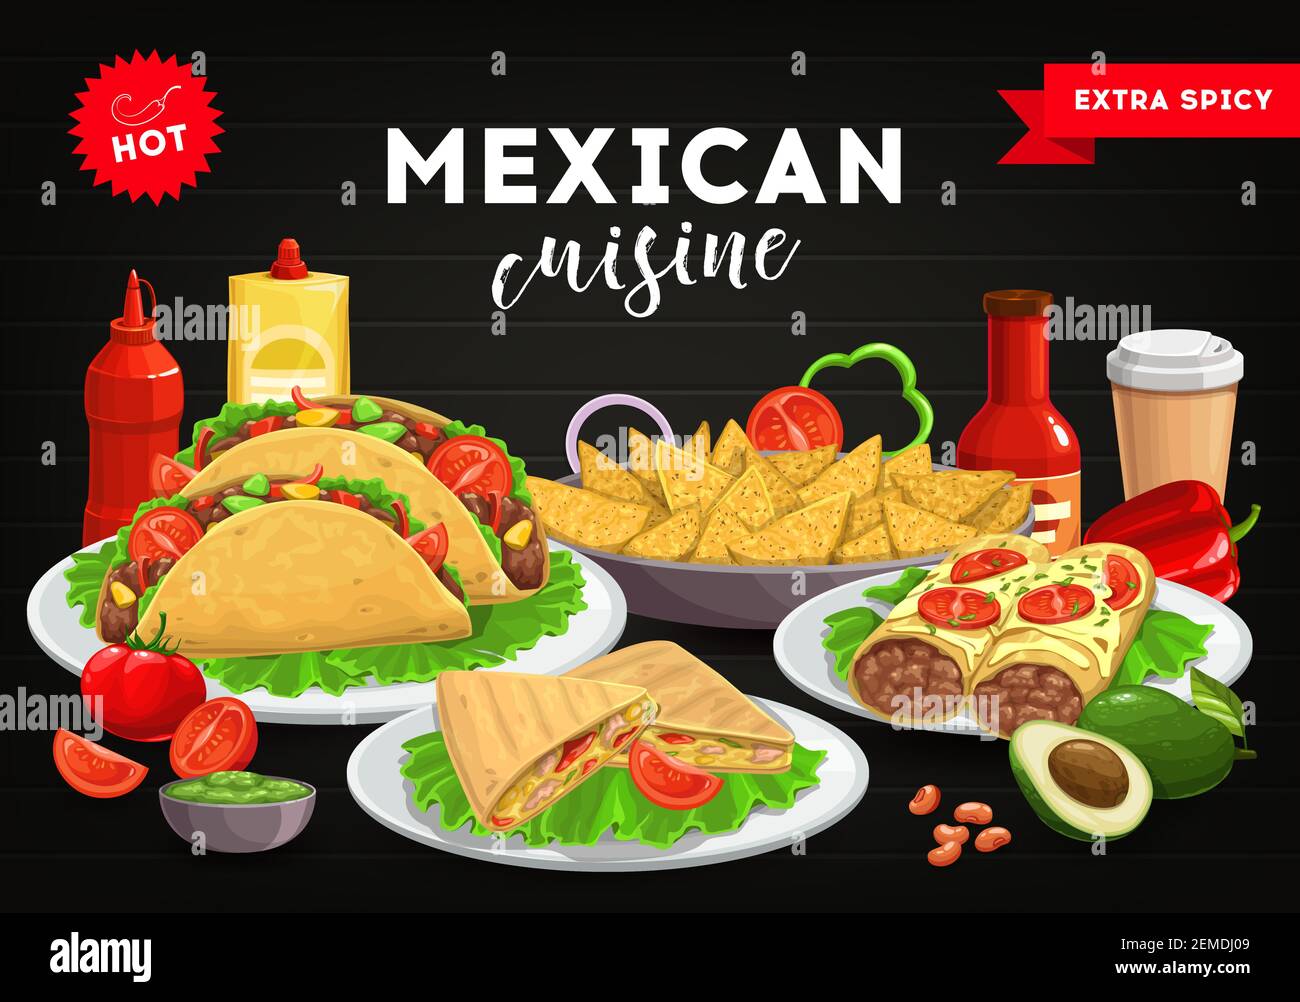 Mexikanische Küche Menü Abdeckung, Mexiko Food Tacos und würzig, Burrito, Vektor-Dinner-Tisch Hintergrund. Mexikanische Küche Kochen und Restaurant Menü Platte mir Stock Vektor